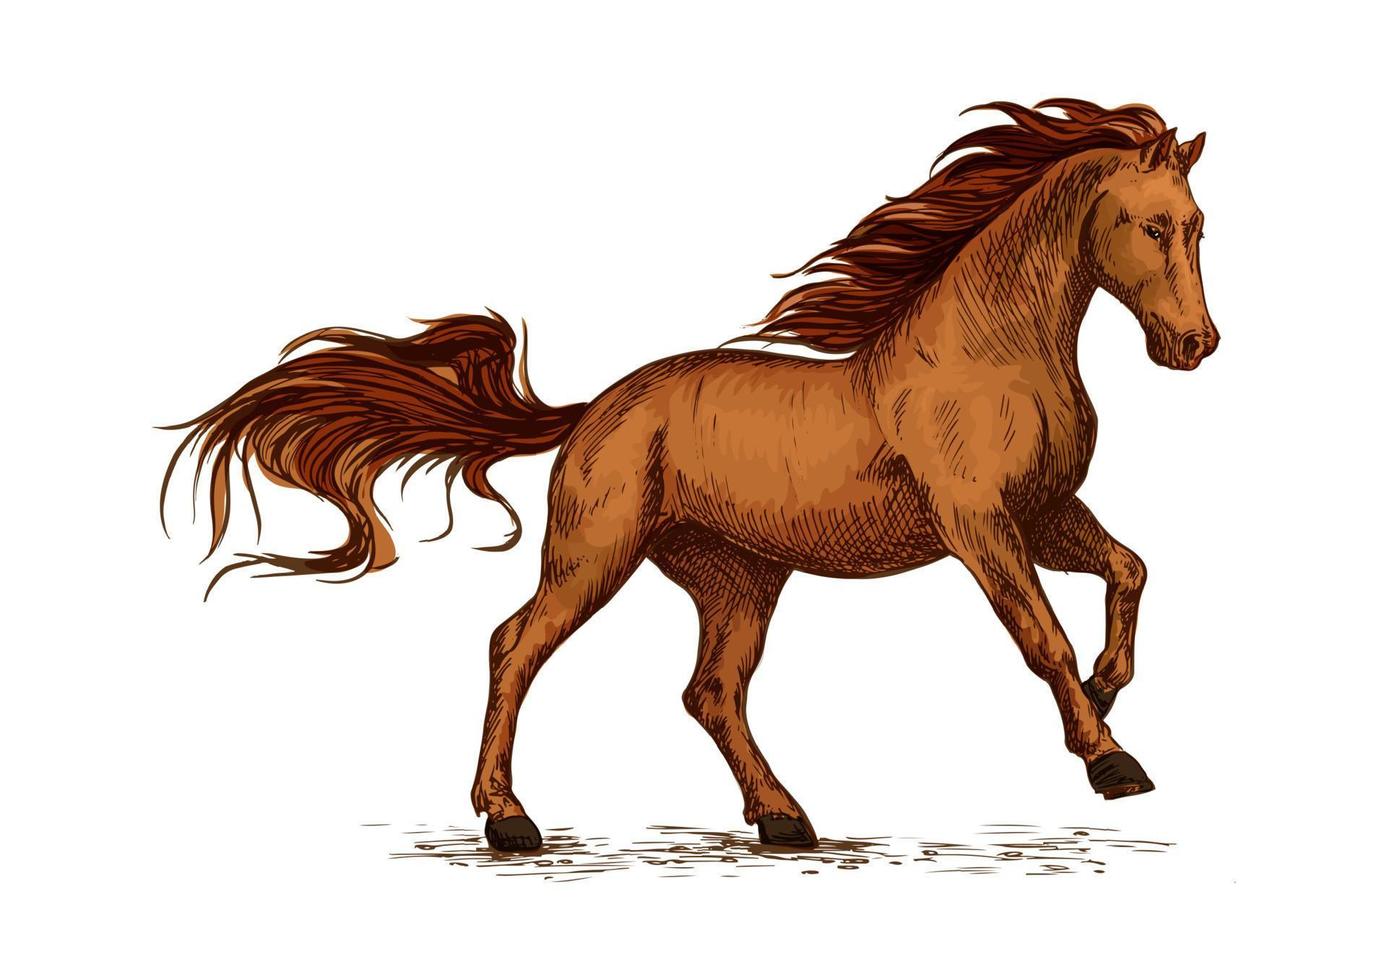 Horse running. Equine horserace sport symbol vector